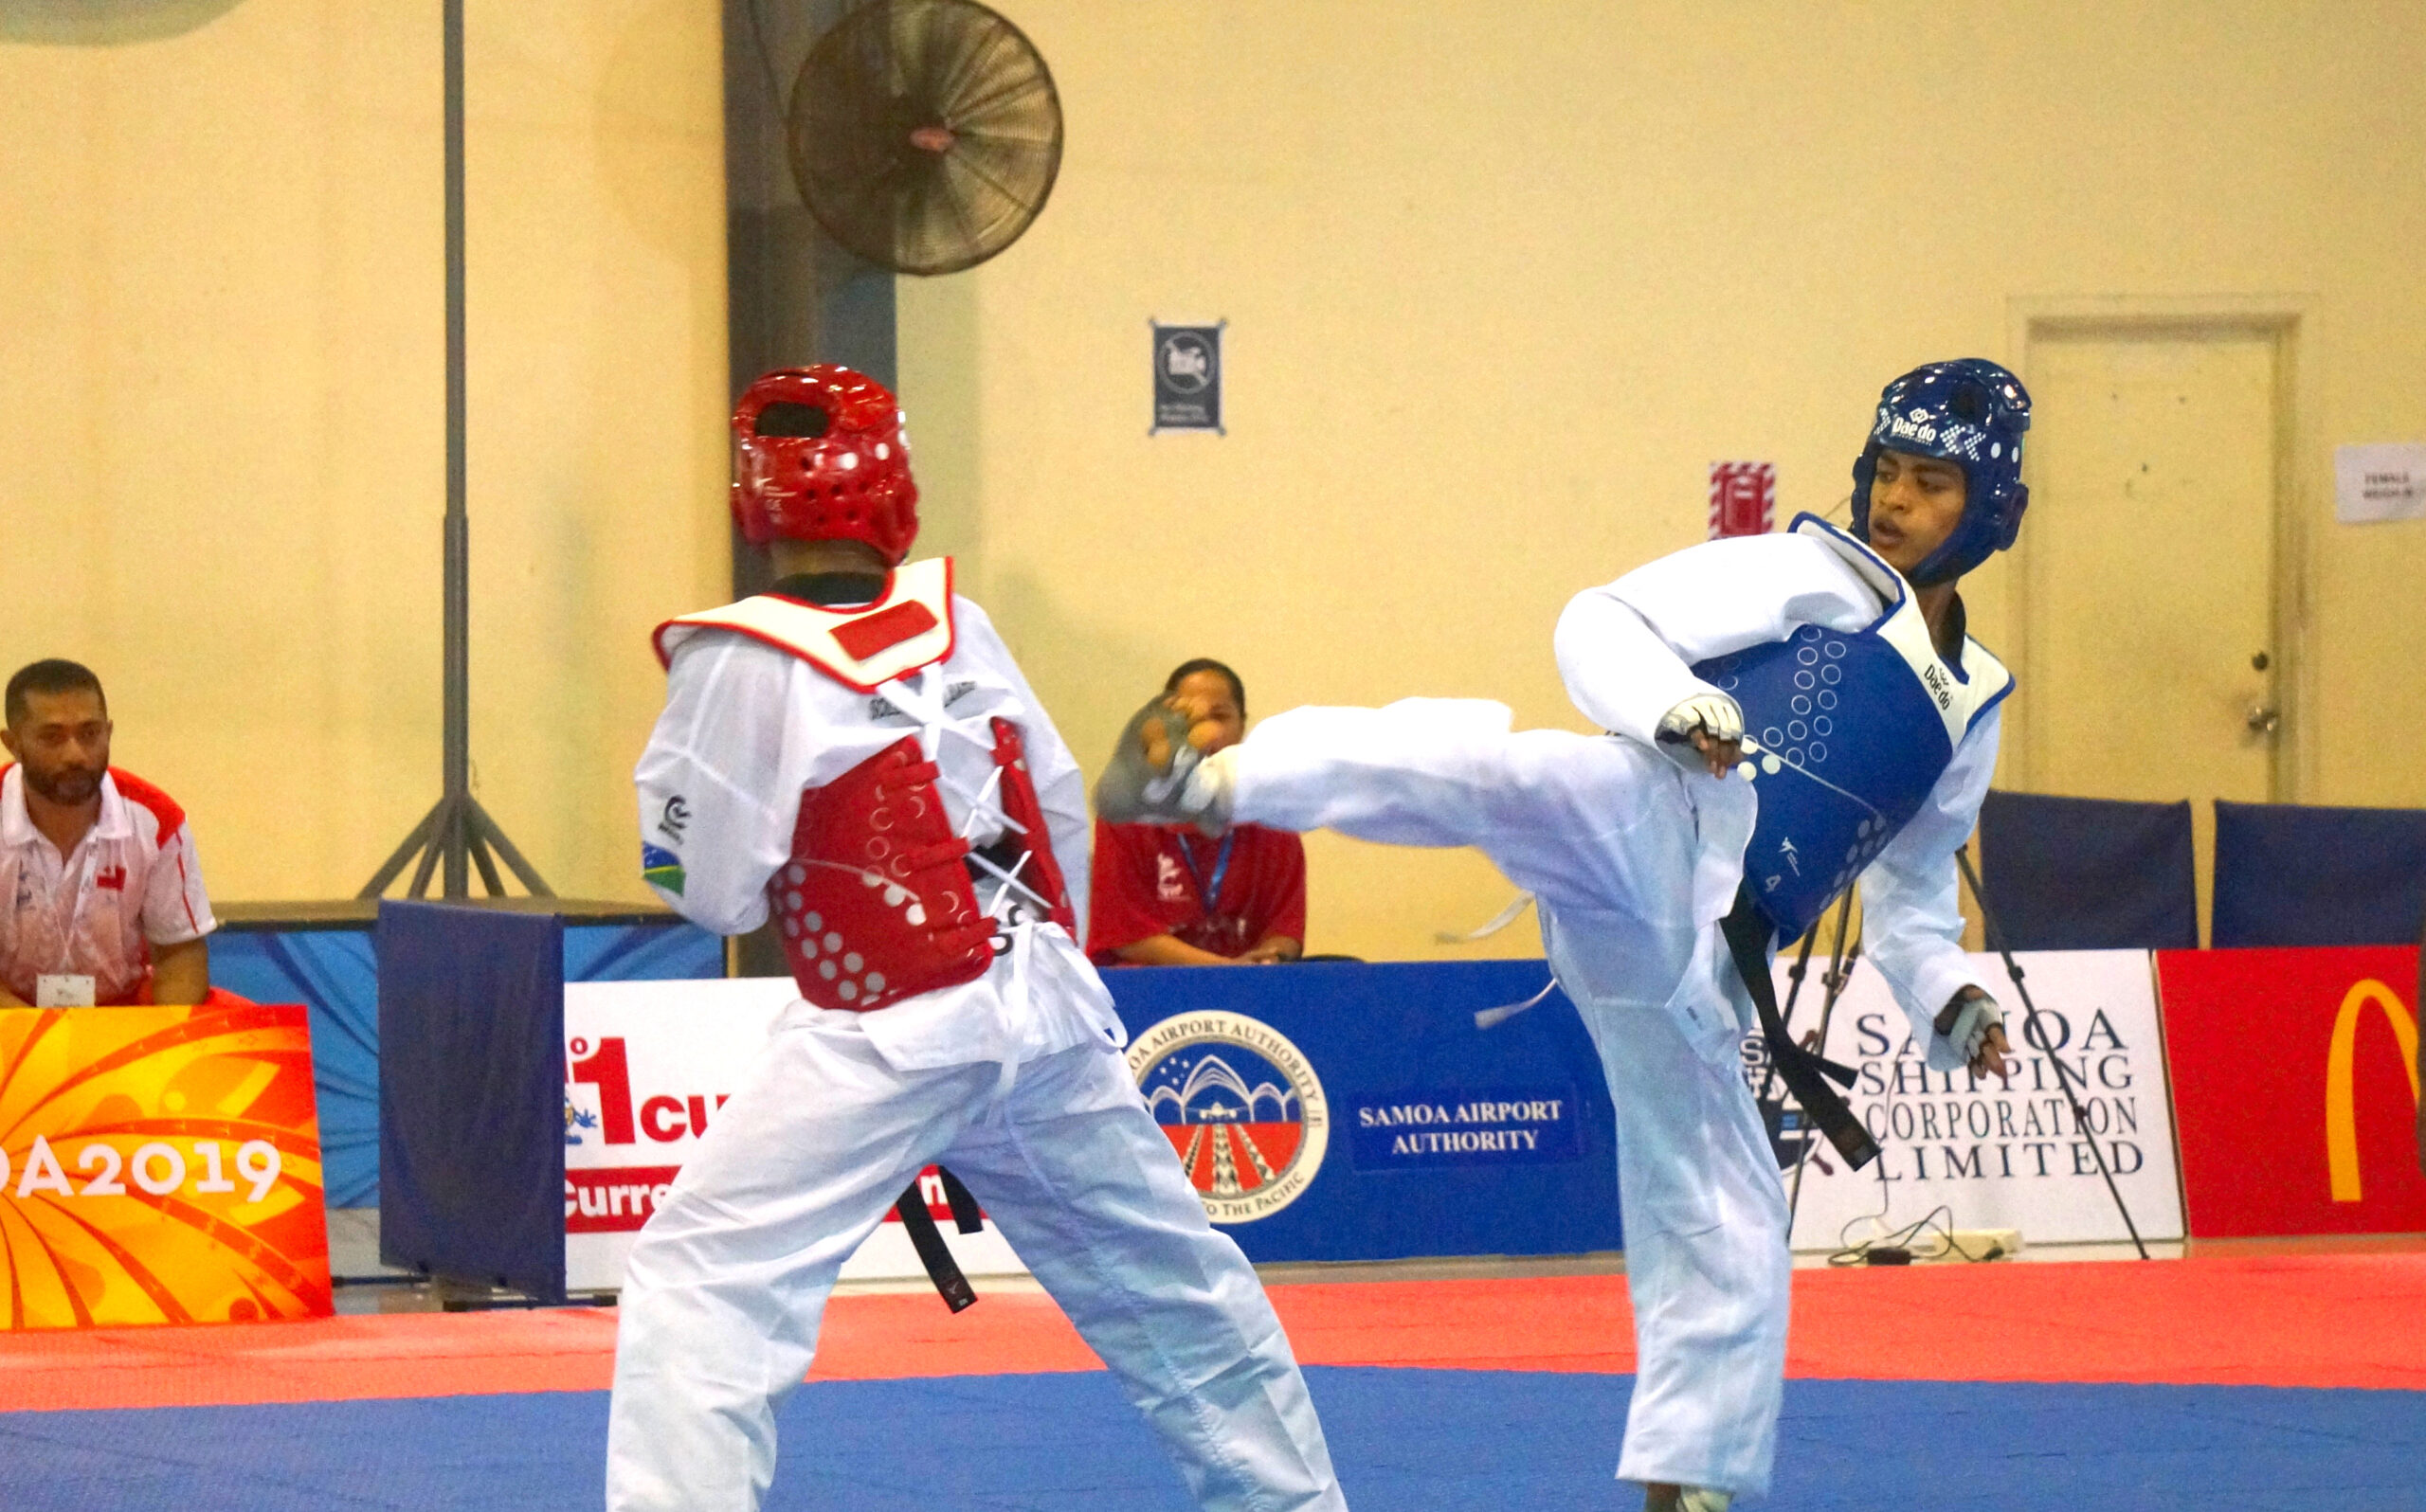 Women competing in taekwondo